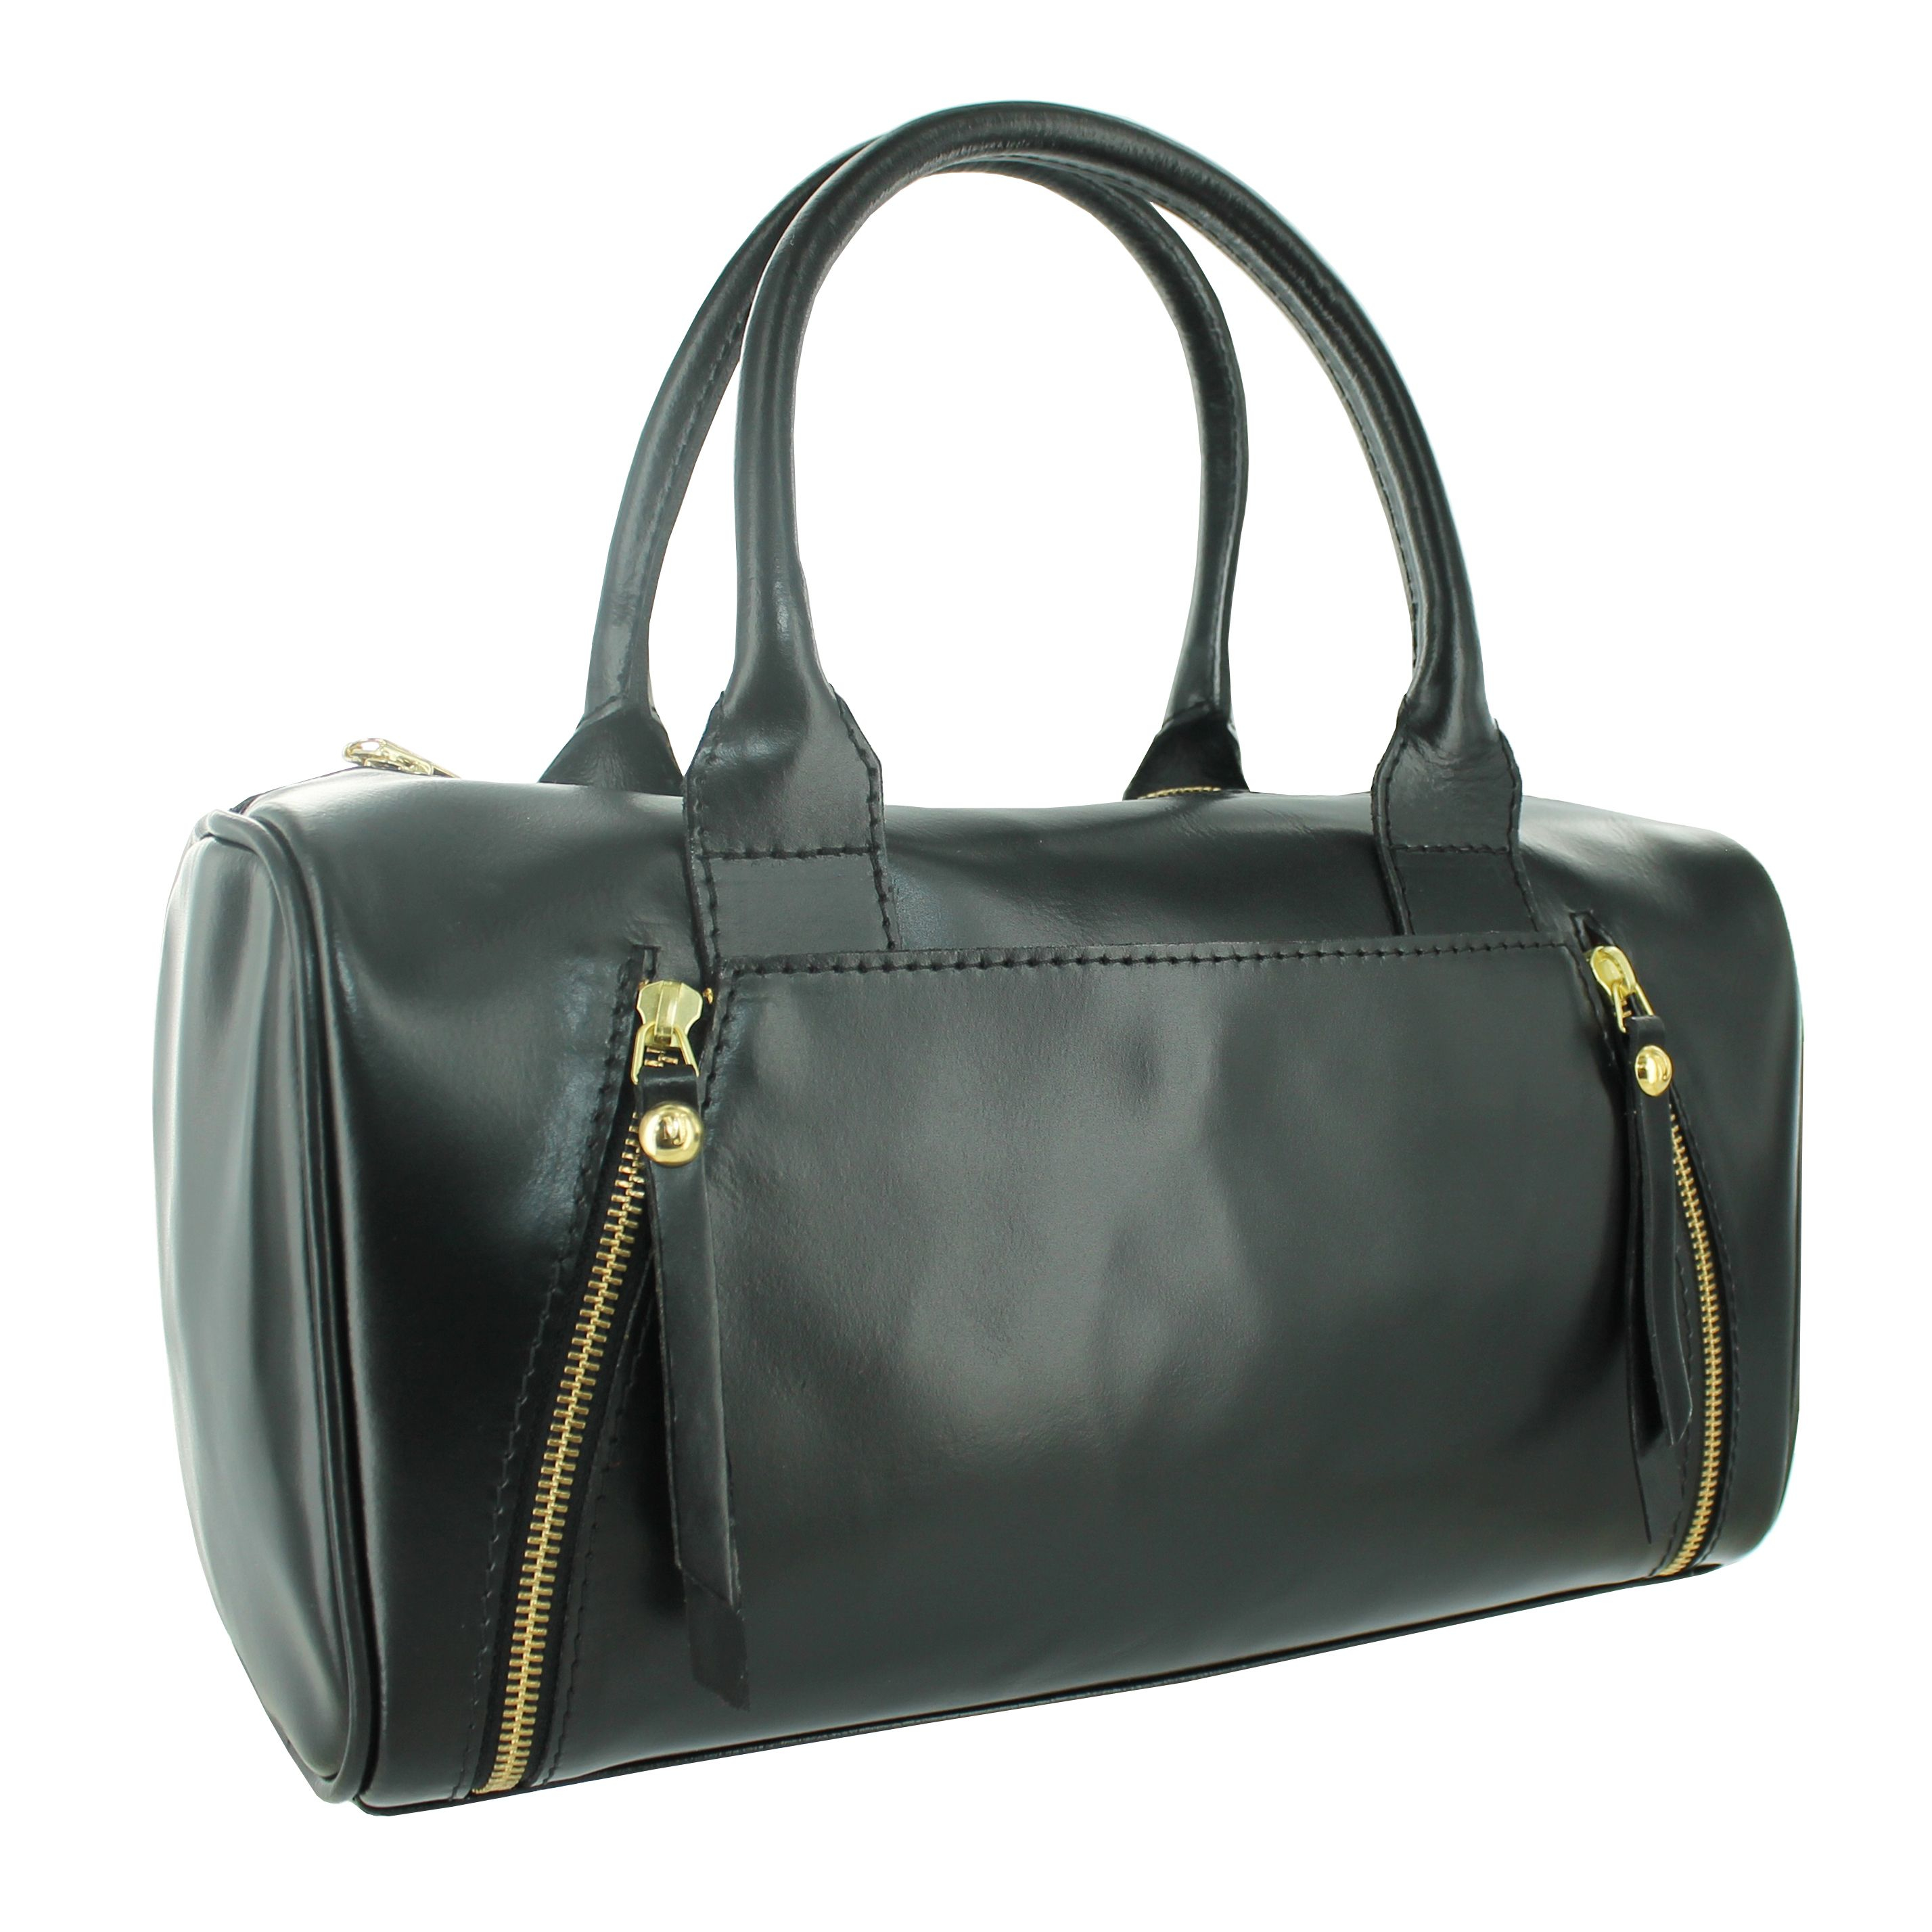 Marta Jonsson Leather Grab Bag in Black - Lyst